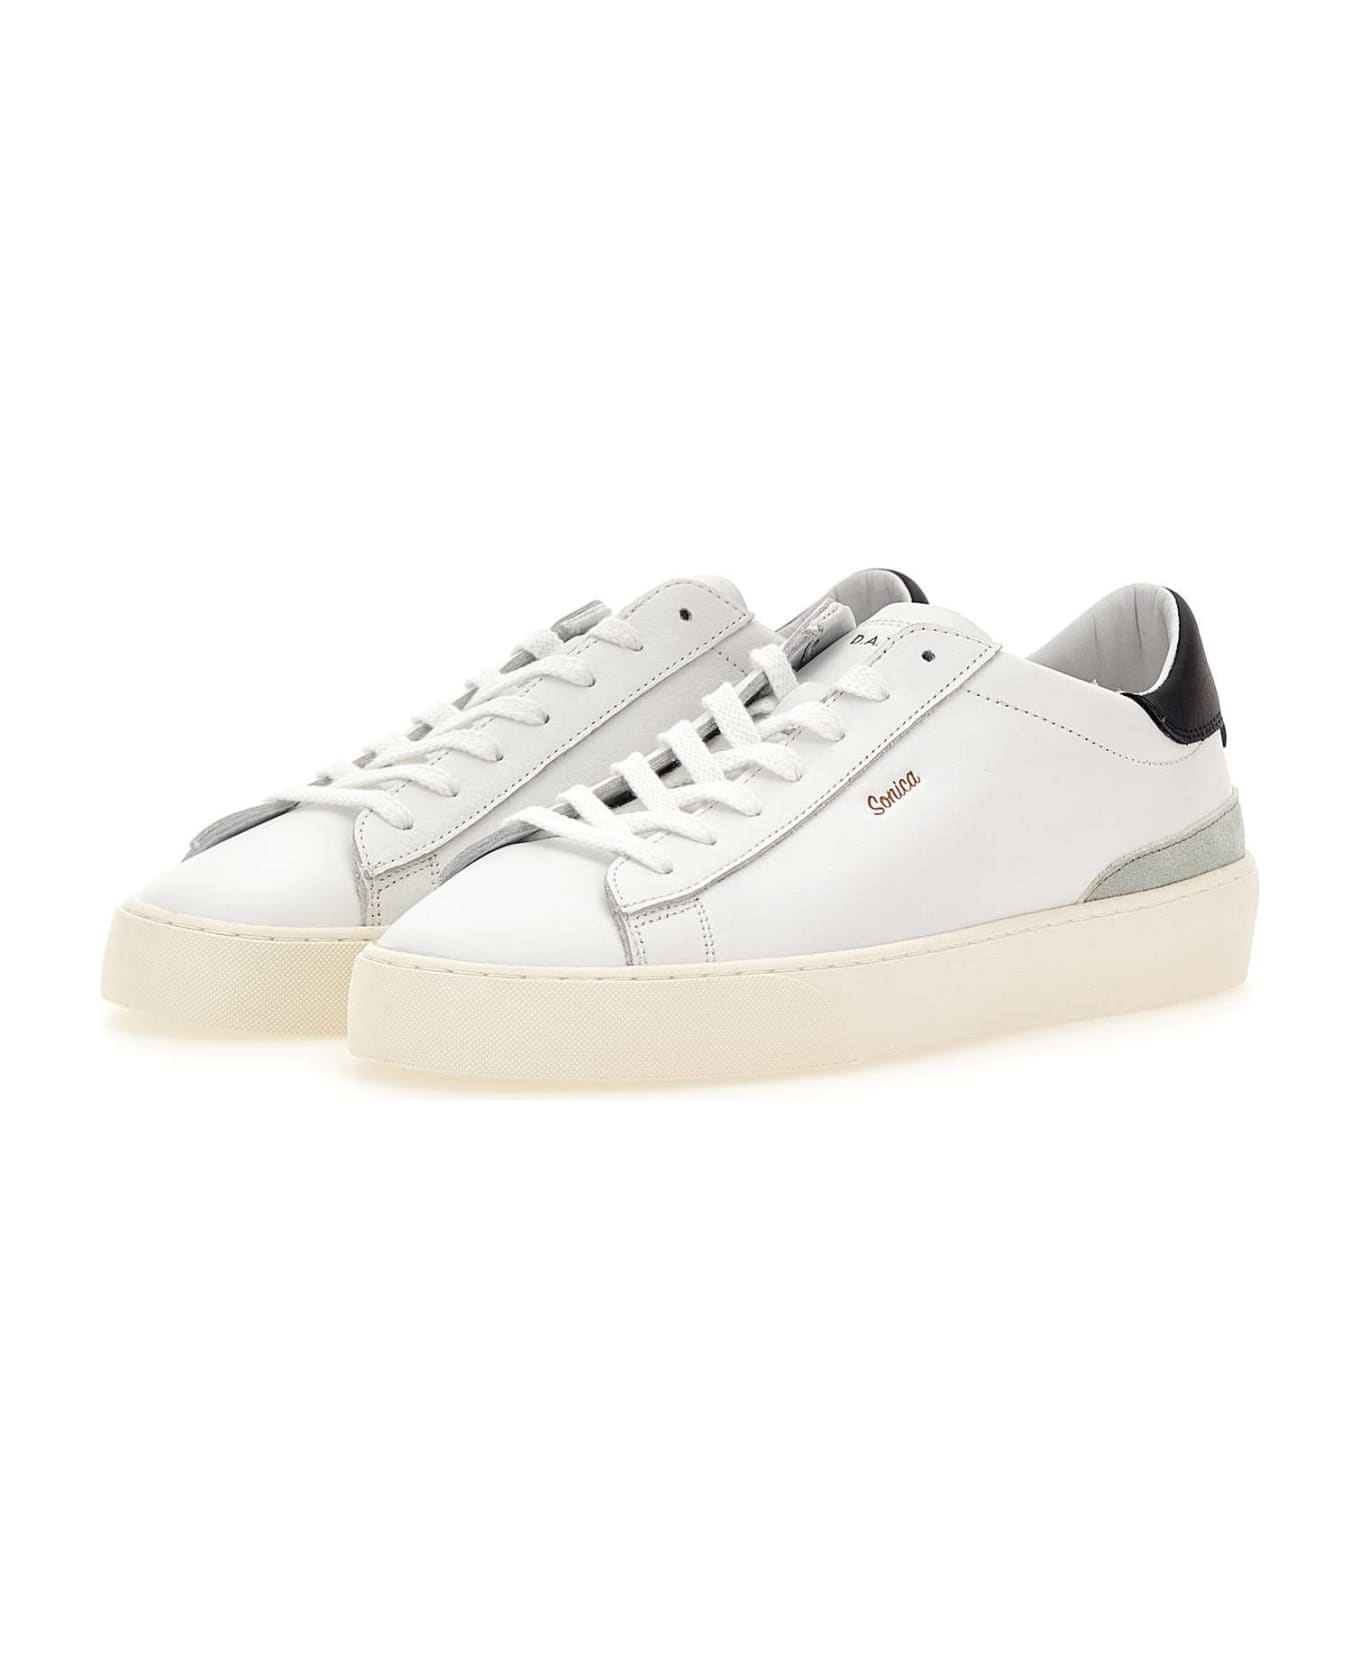 D.A.T.E. "sonica Calf" Leather Sneakers - WHITE